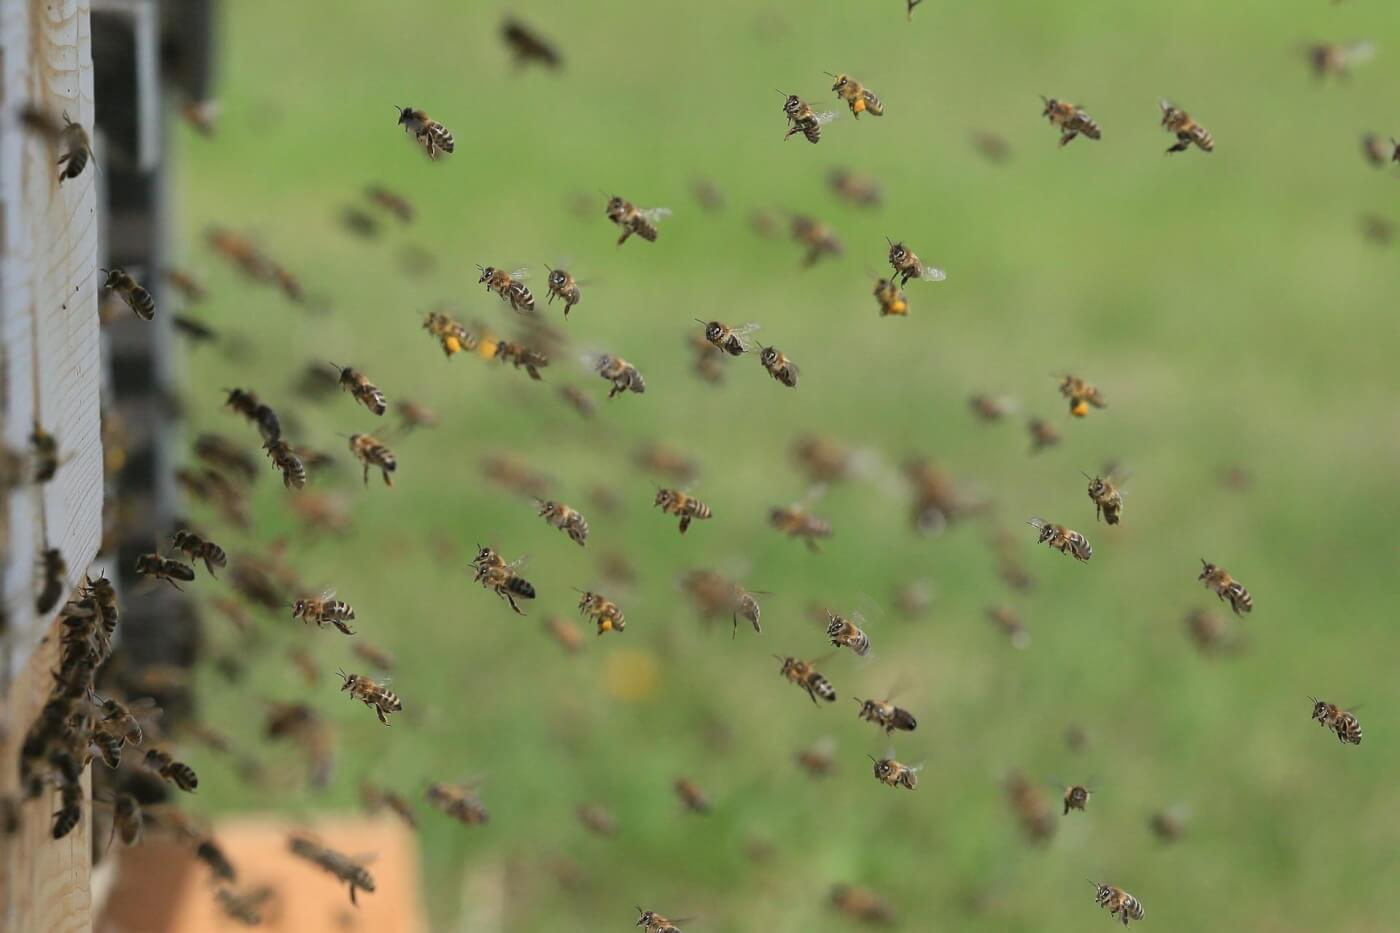 bees in flight